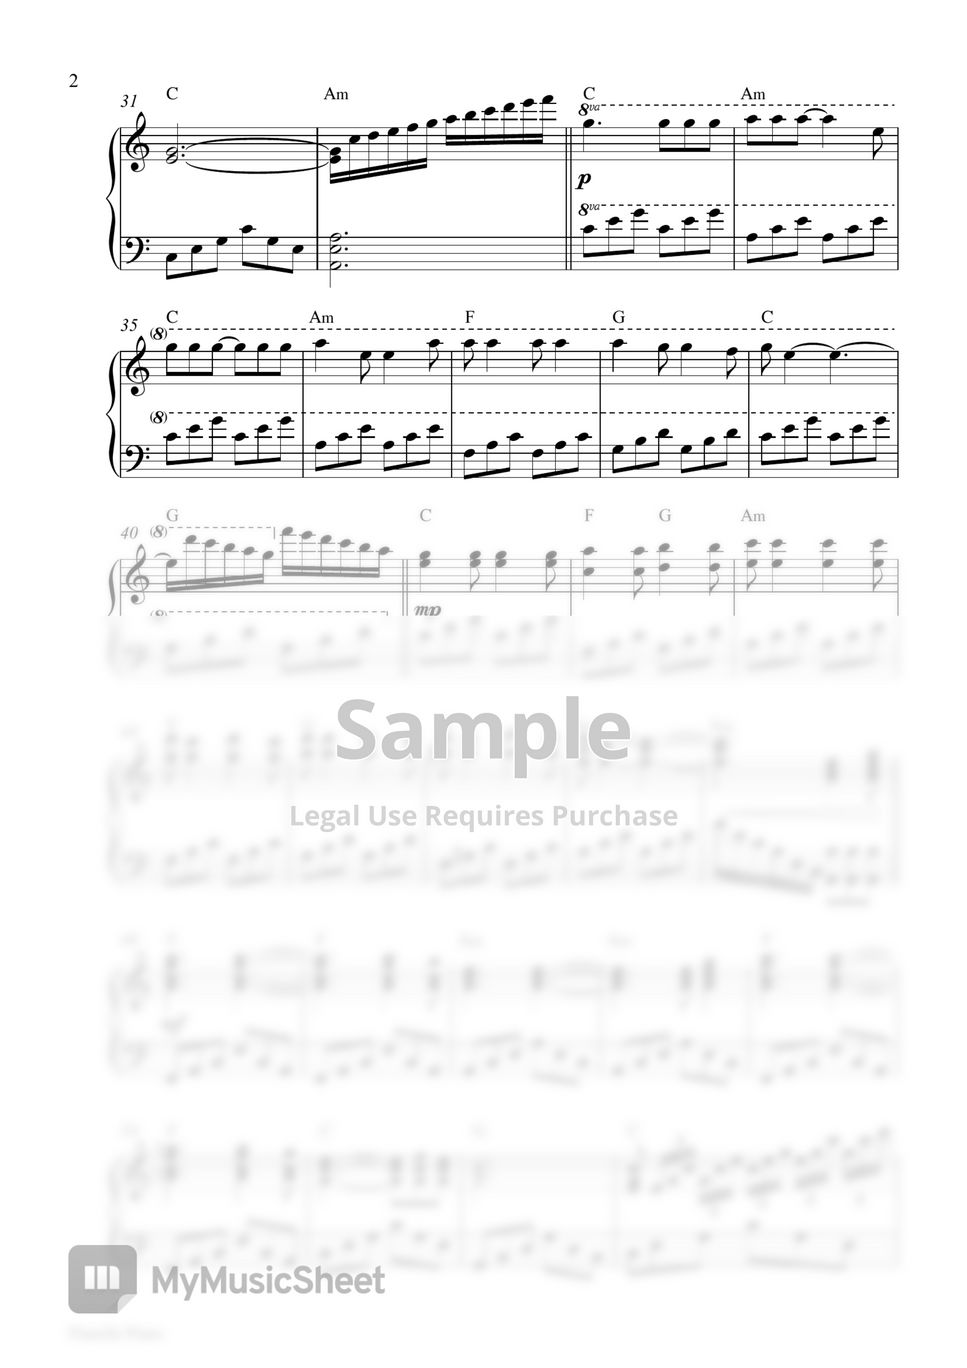 Leonard Cohen - Hallelujah (Piano Sheet) by Pianella Piano